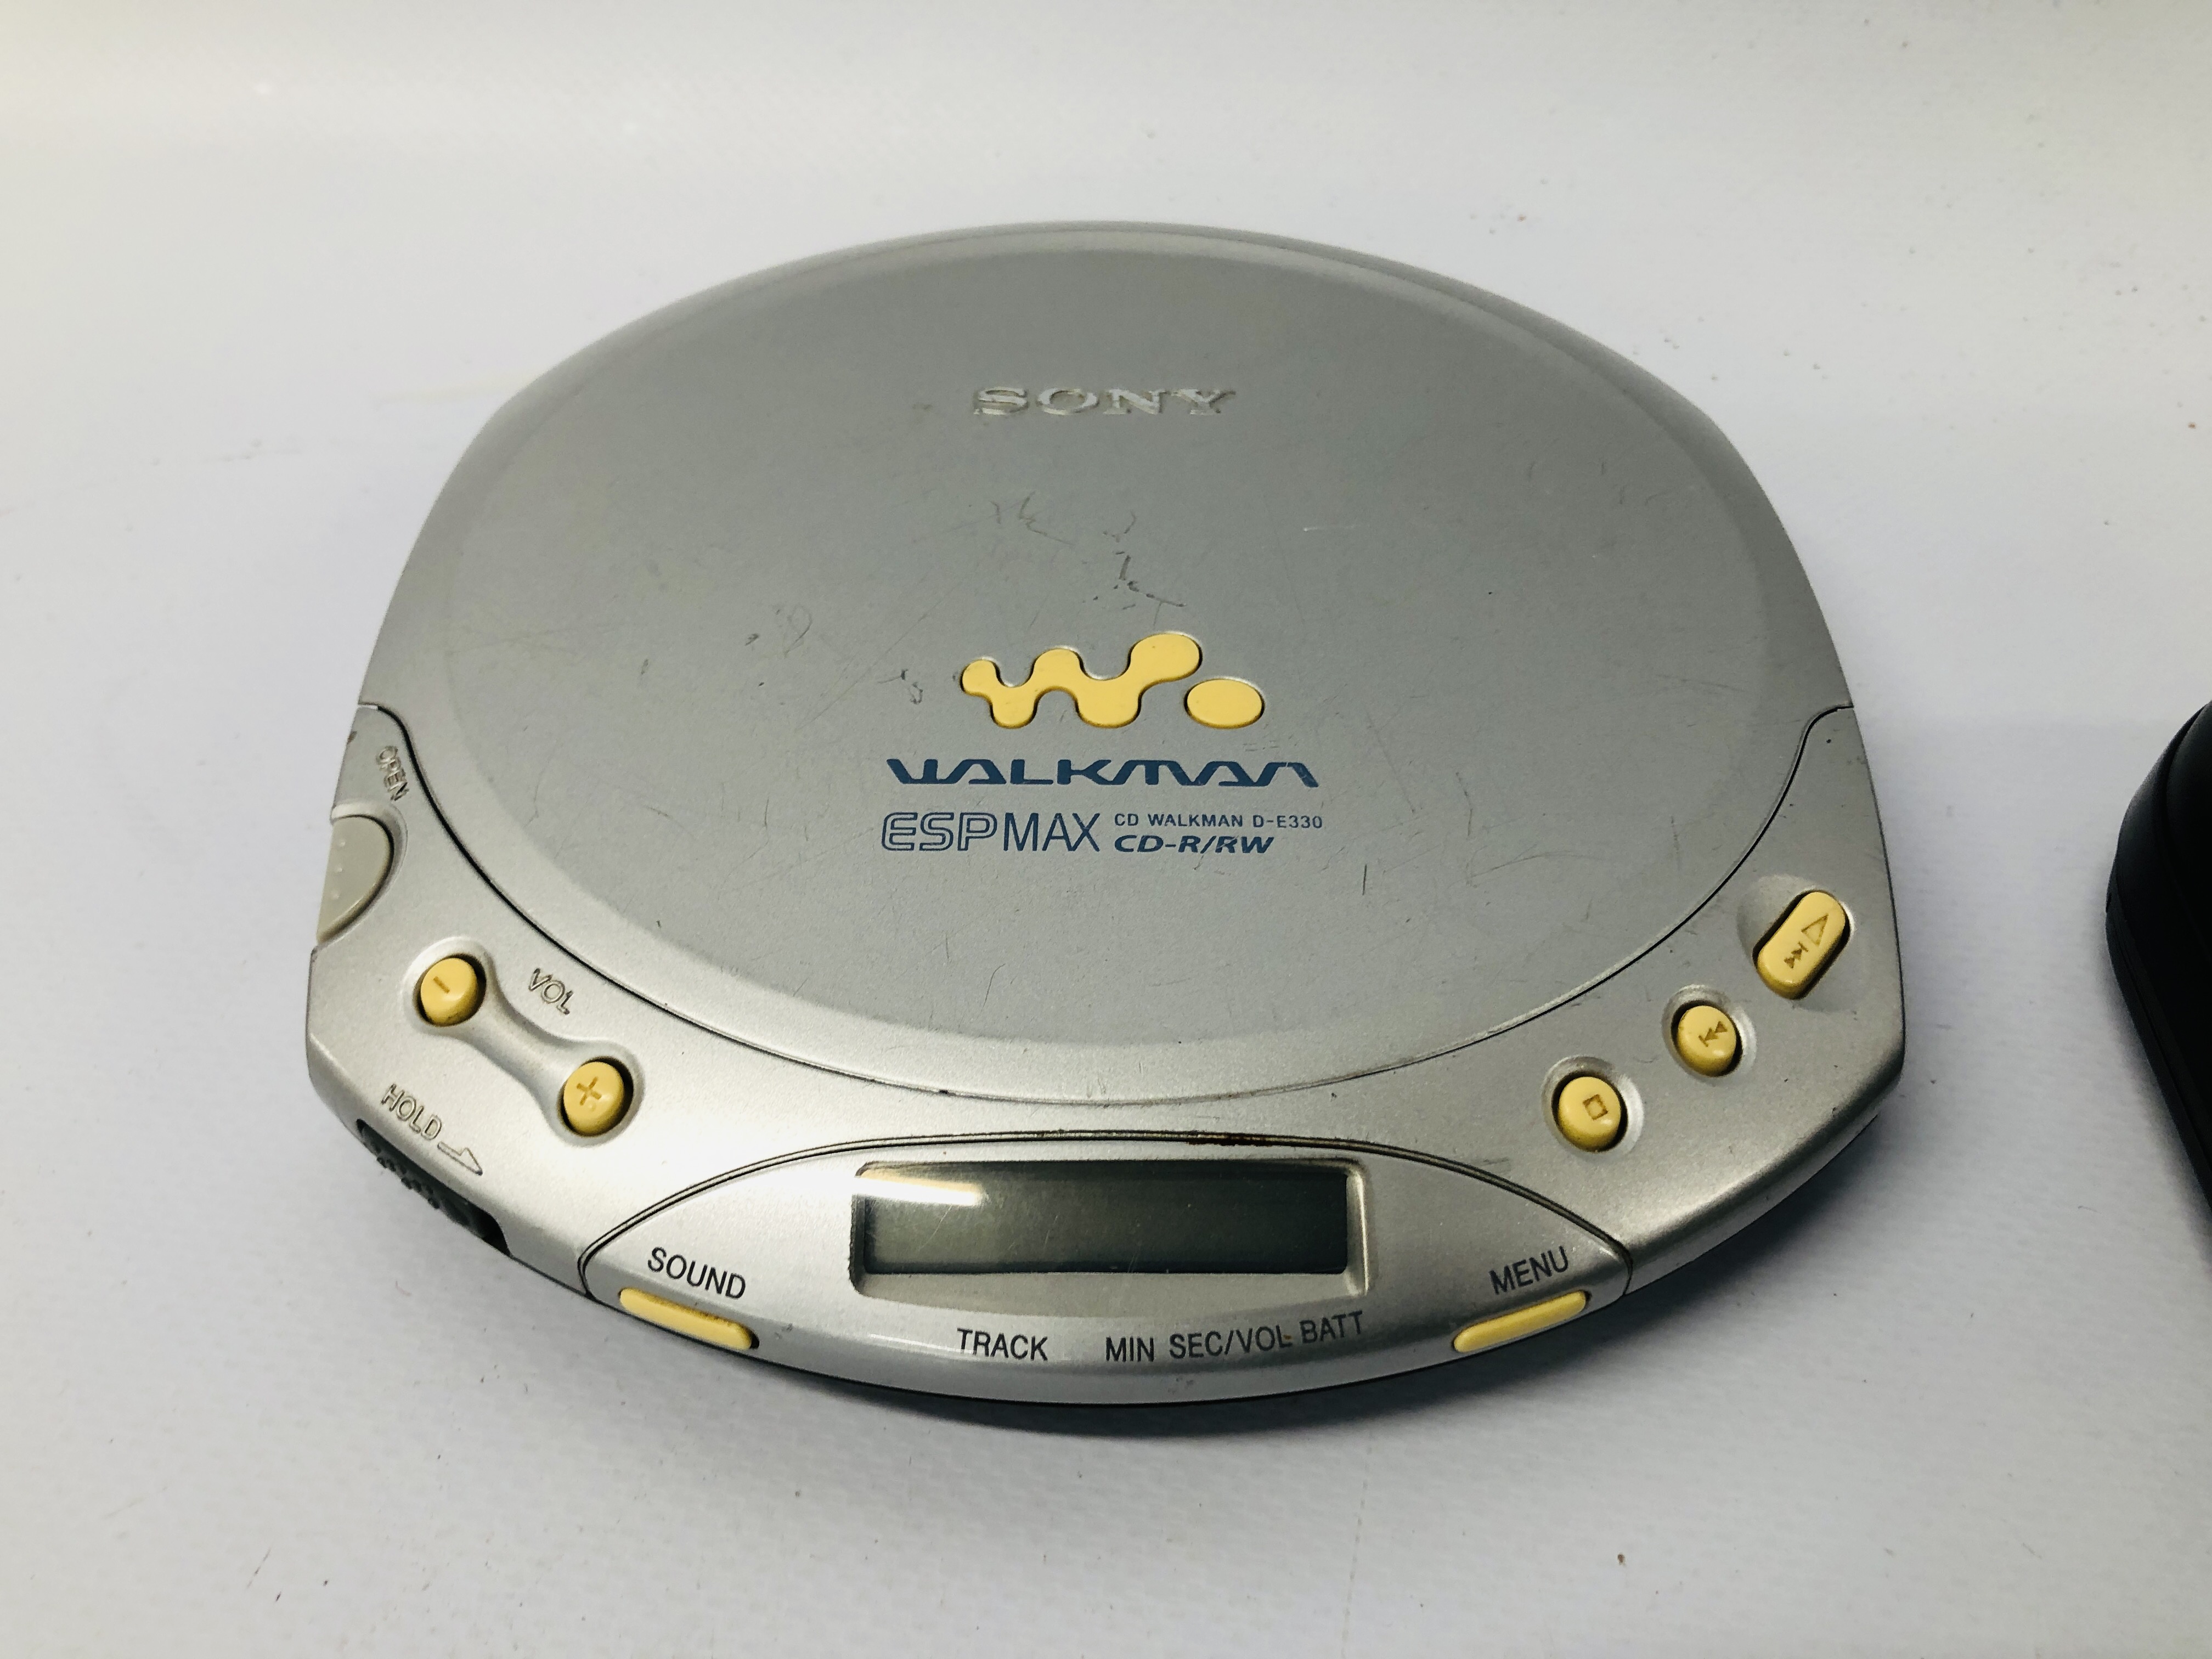 3 X WALKMANS TO INCLUDE SONY CD D-EJ2000, SONY CD ESPMAX D-E330, AKAI PD-X56 - SOLD AS SEEN. - Image 3 of 5